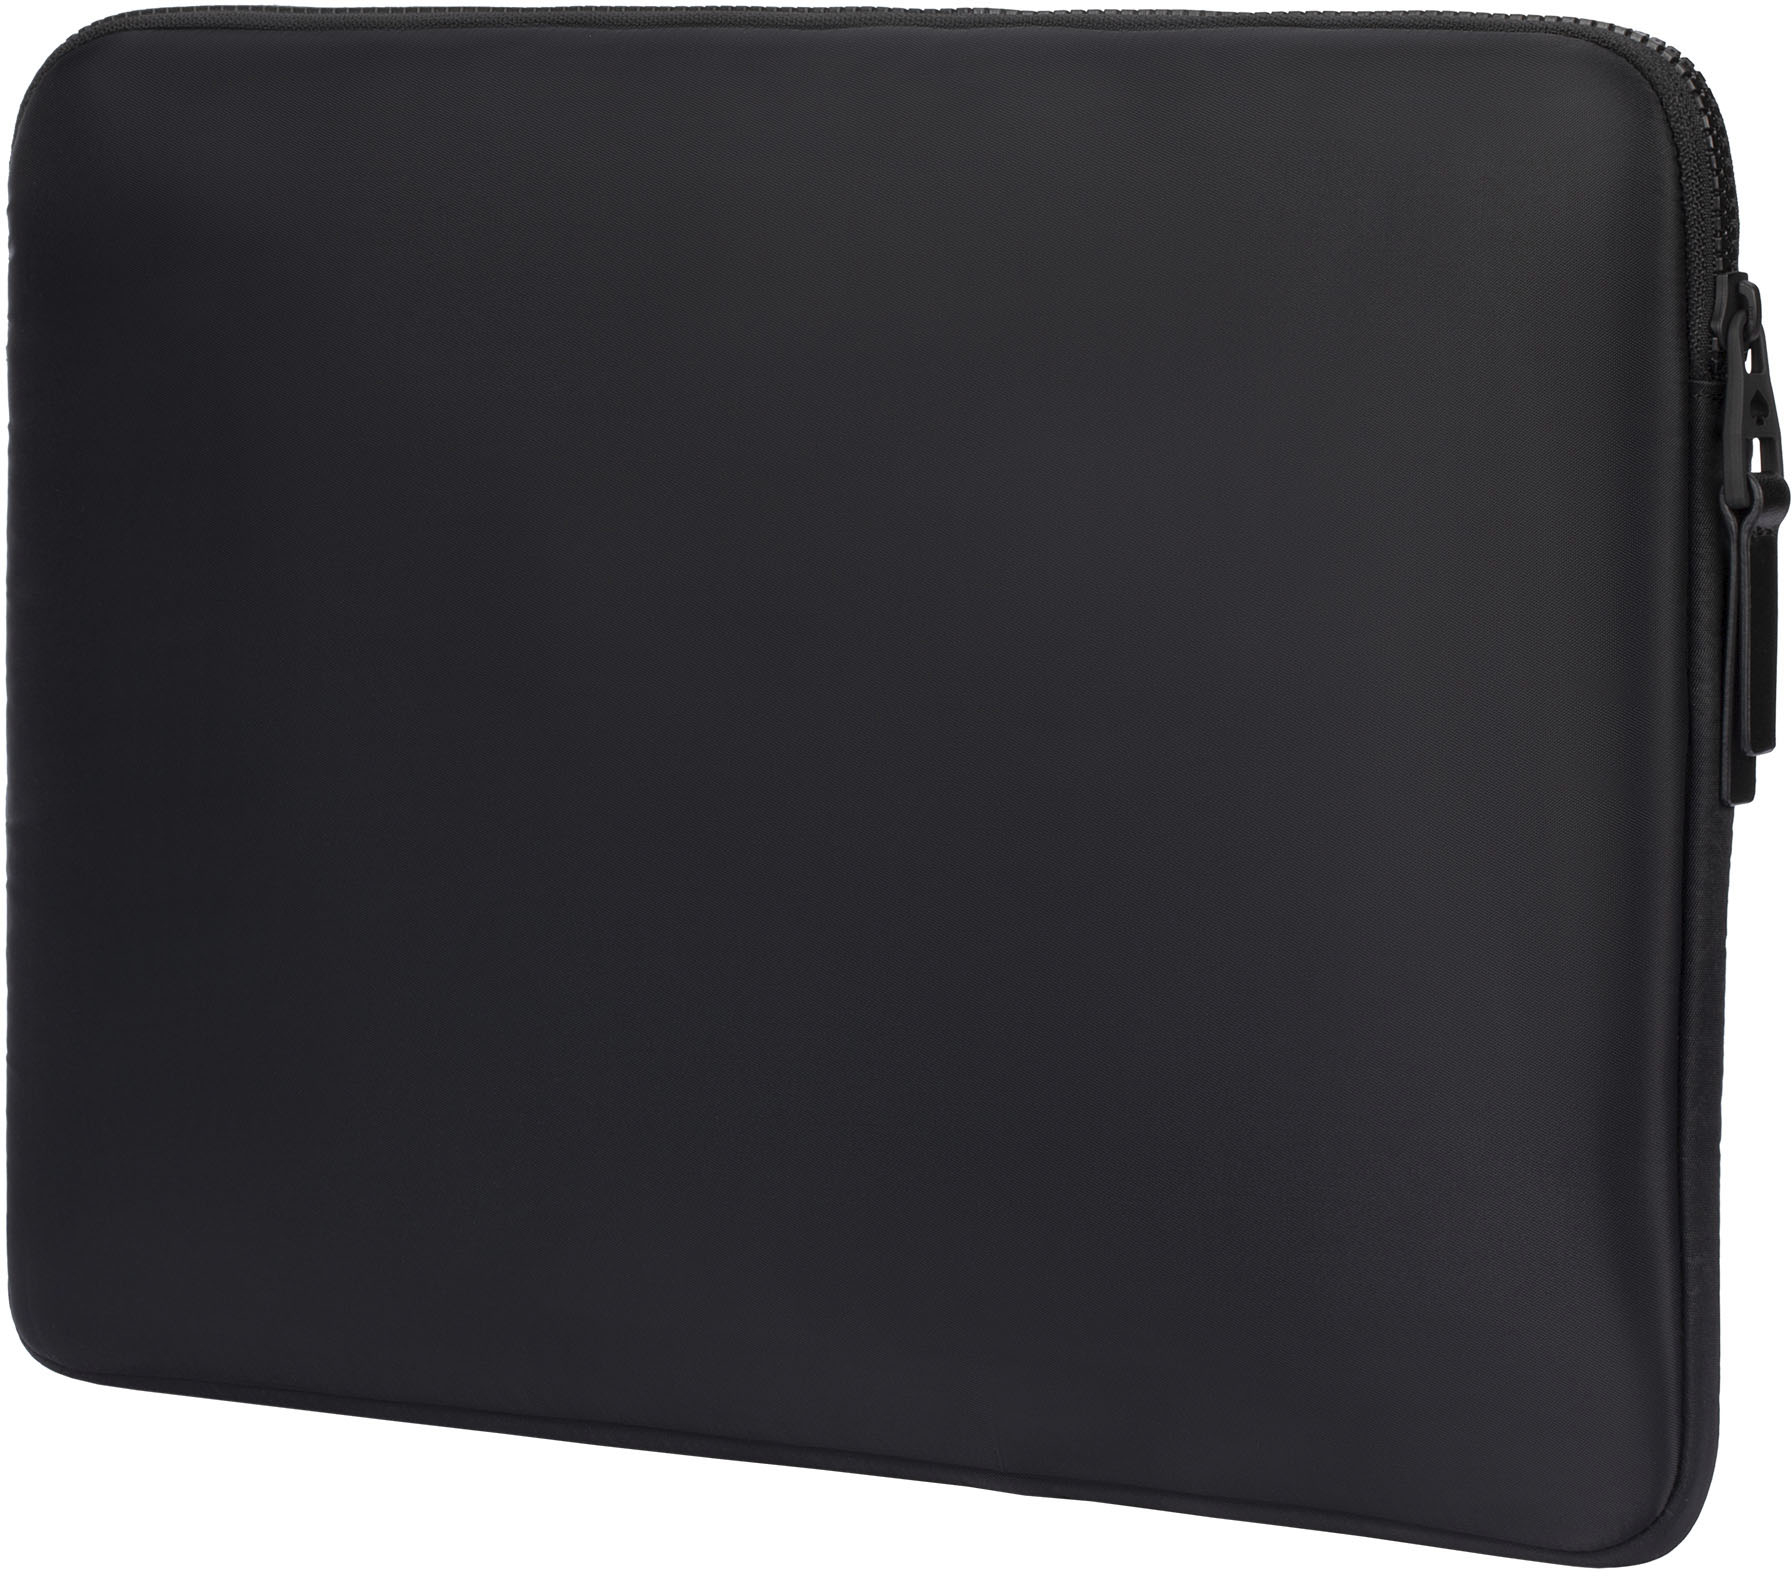 Auckland Fonetiek Traditie kate spade new york Laptop Sleeve for 15"-16" Black KSMB-025-BLK - Best Buy